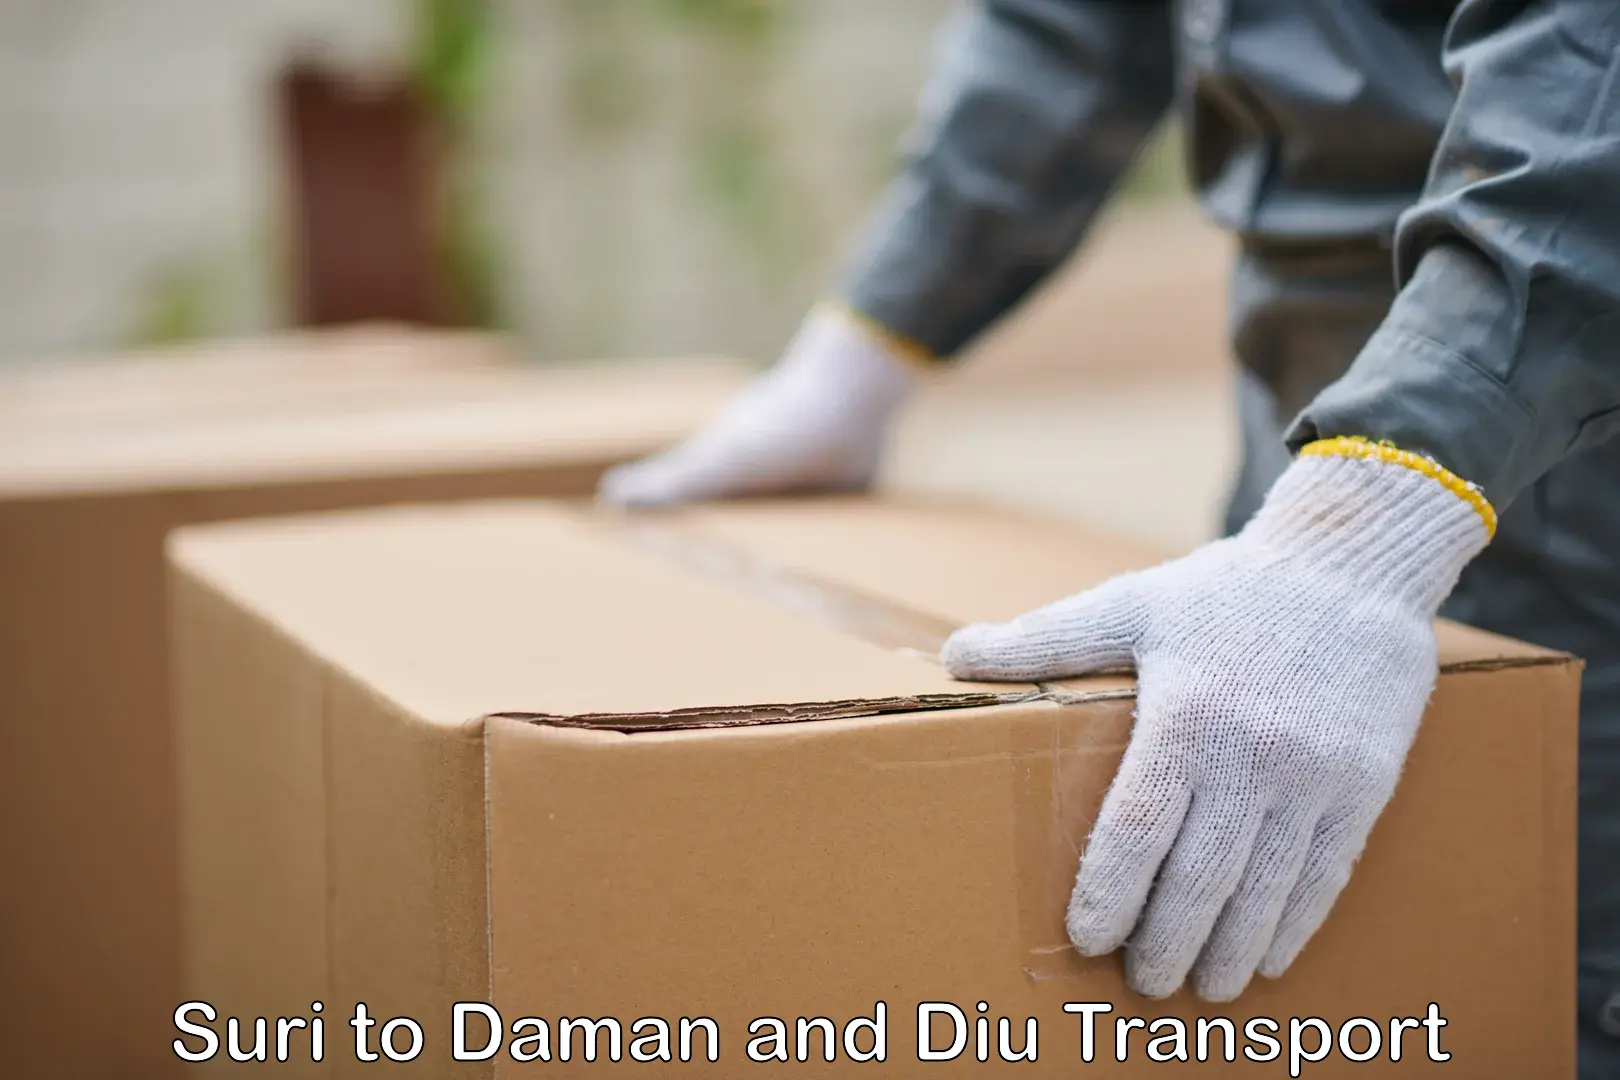 Container transport service Suri to Daman